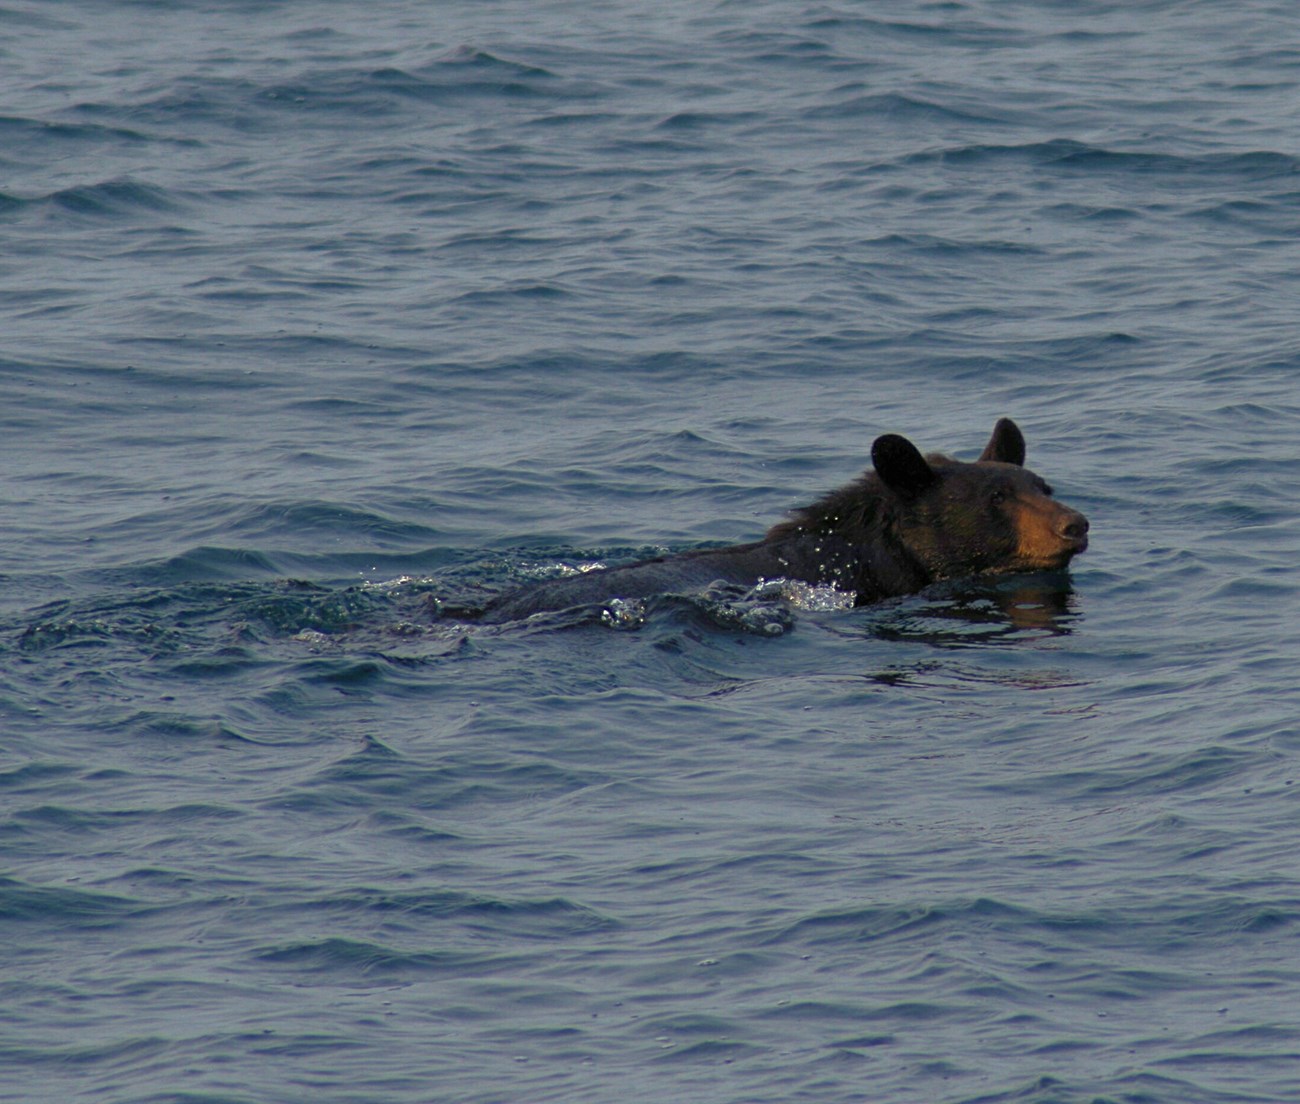 Black bear swimming in blue water.